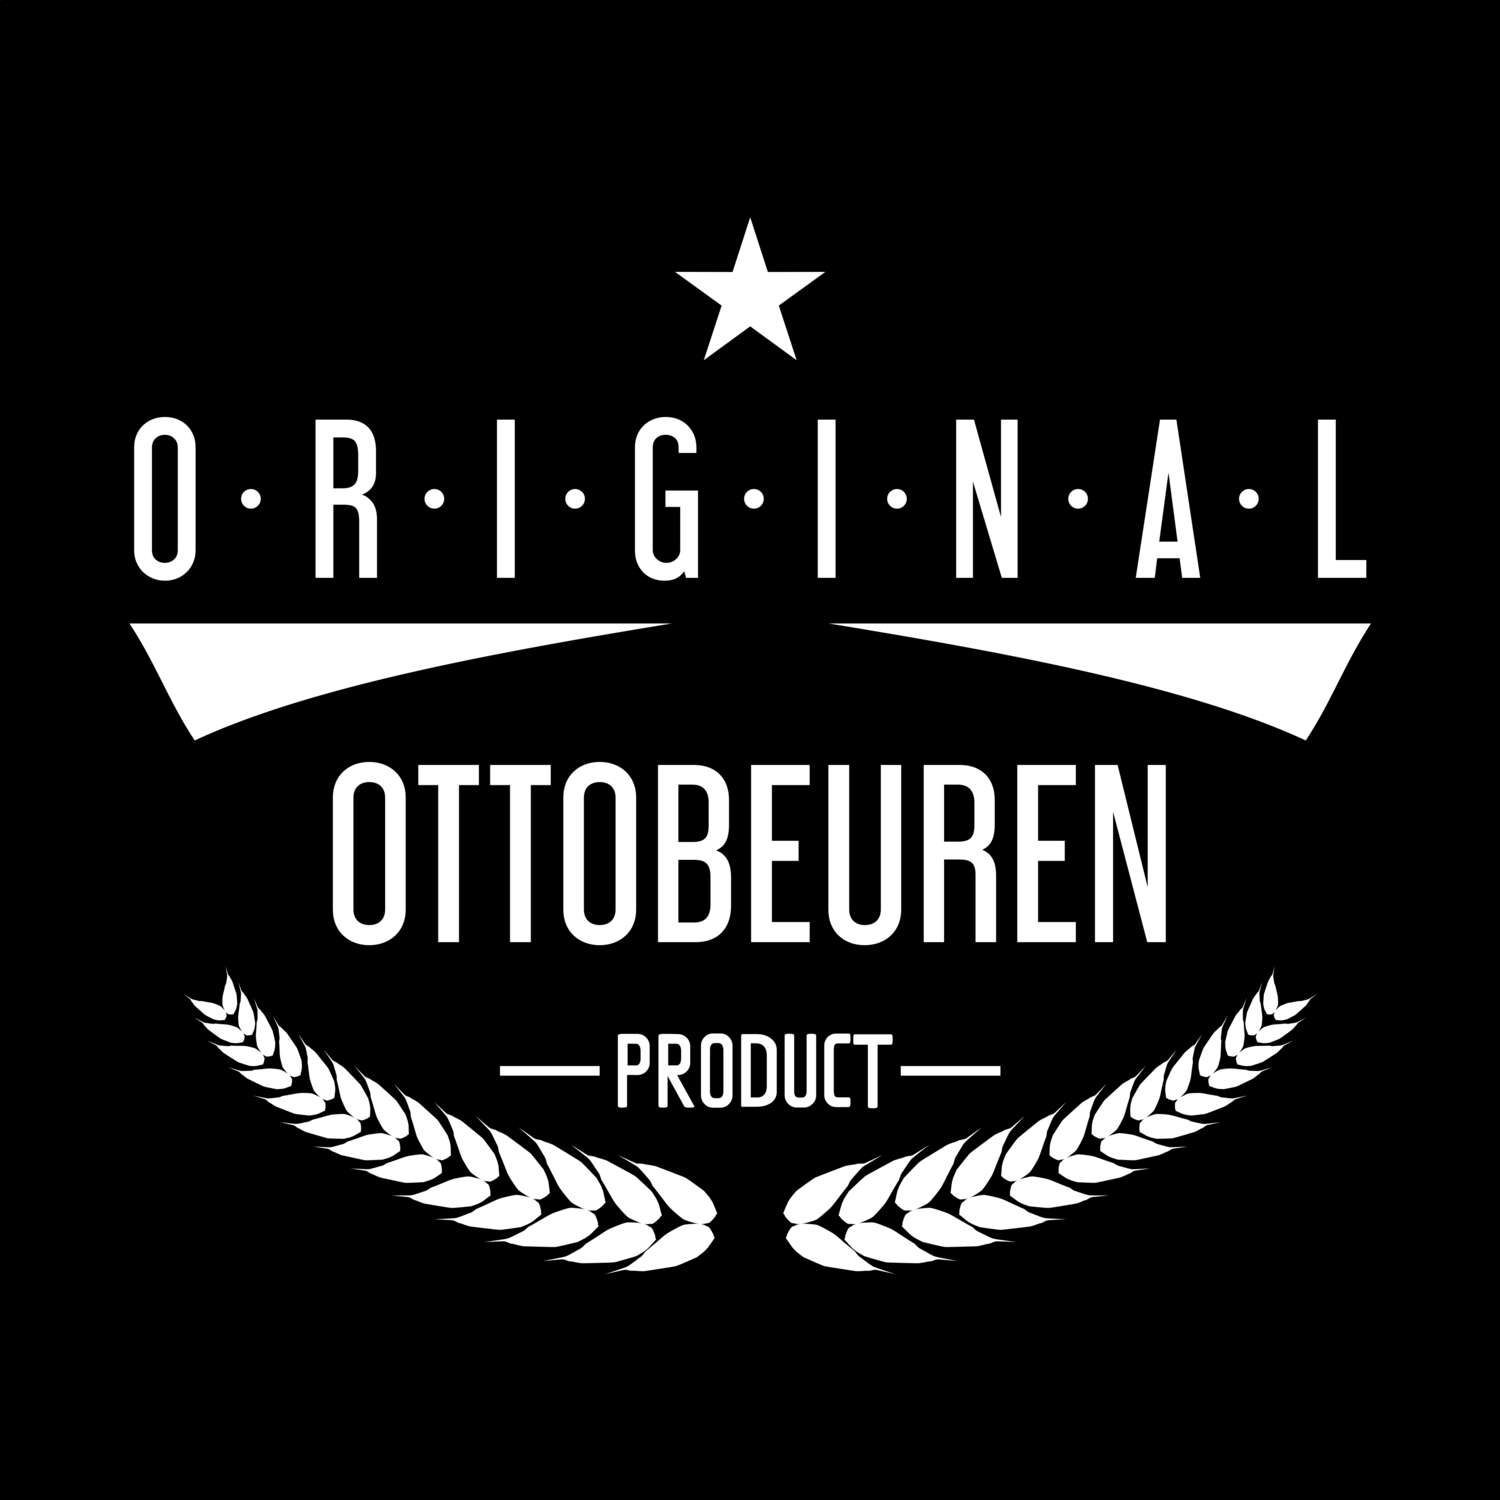 Ottobeuren T-Shirt »Original Product«